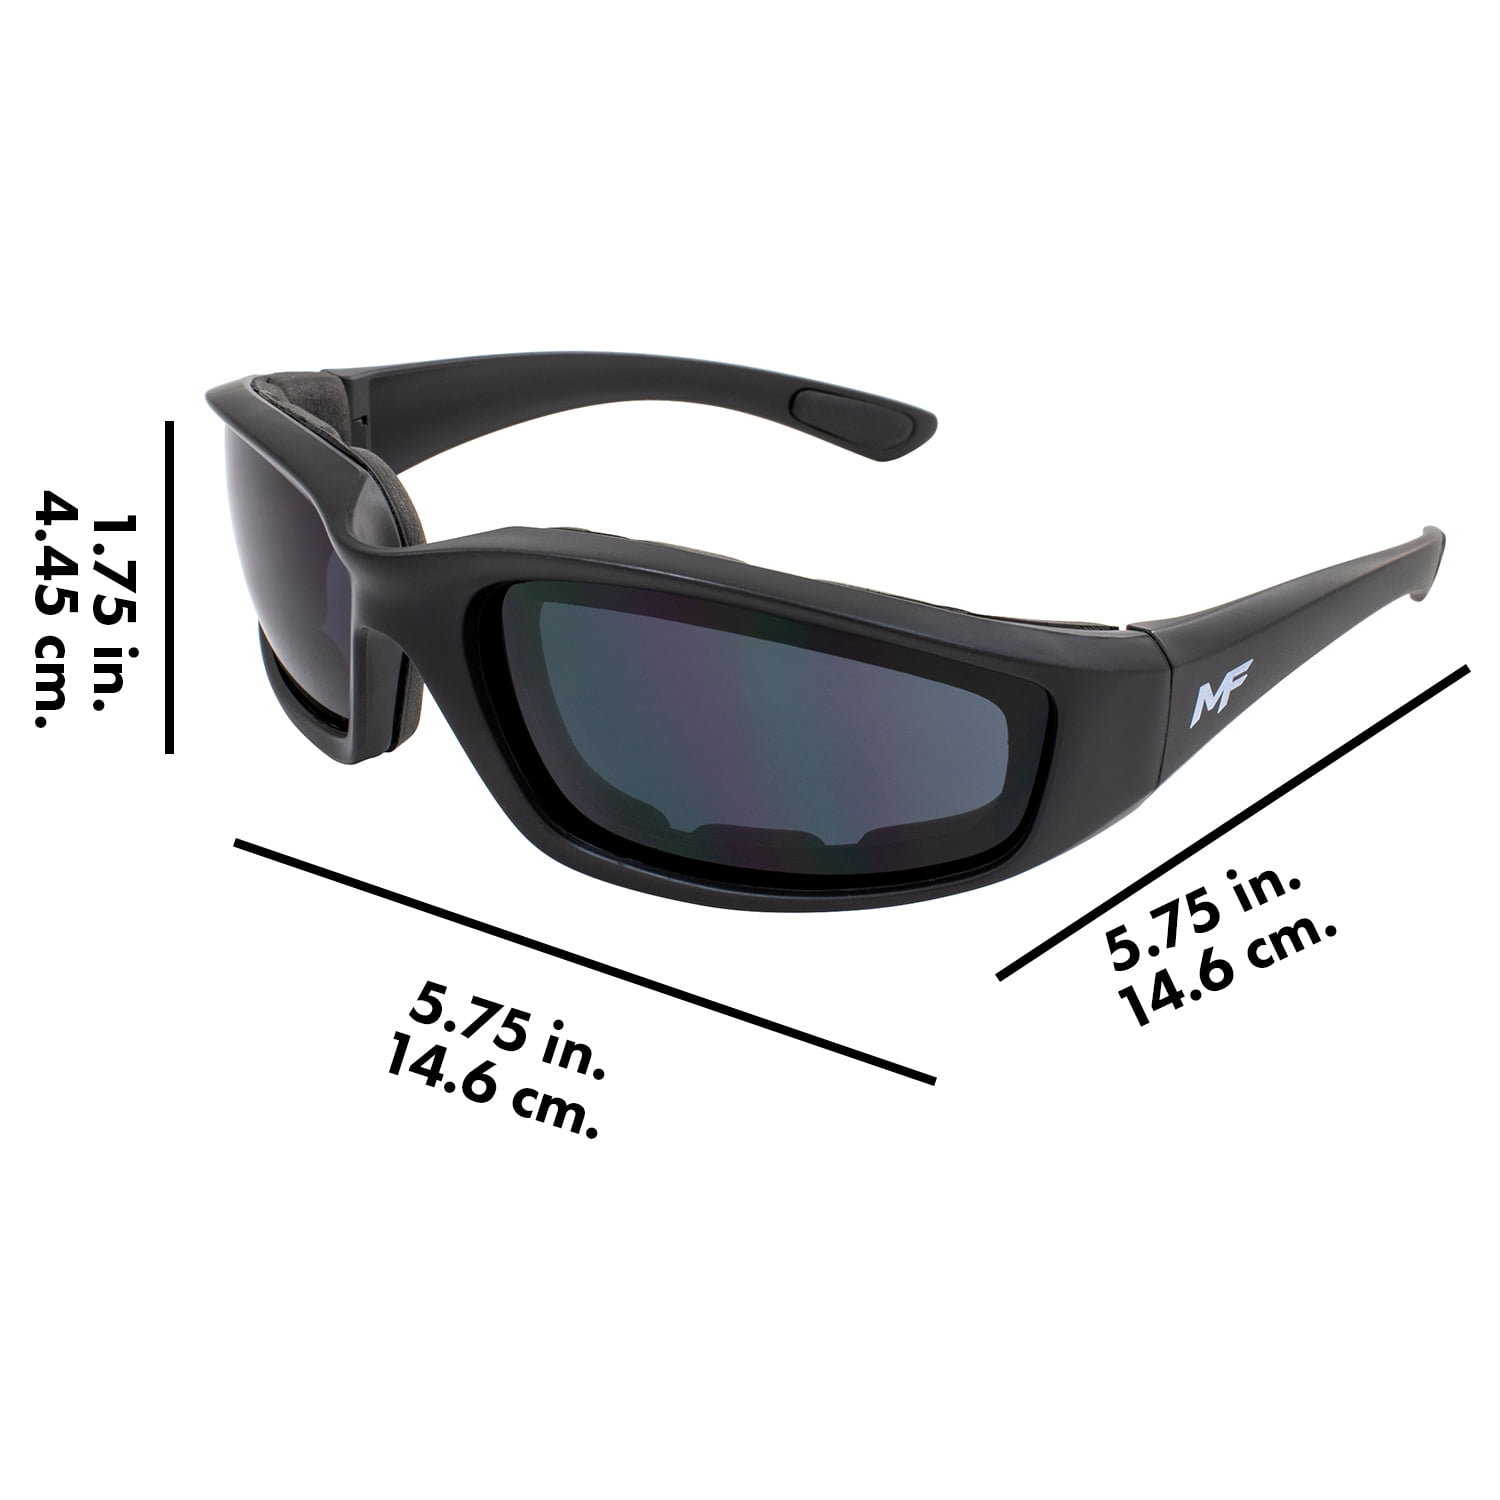 MF Sunglasses (Black Frame/Driving Lens) - Walmart.com